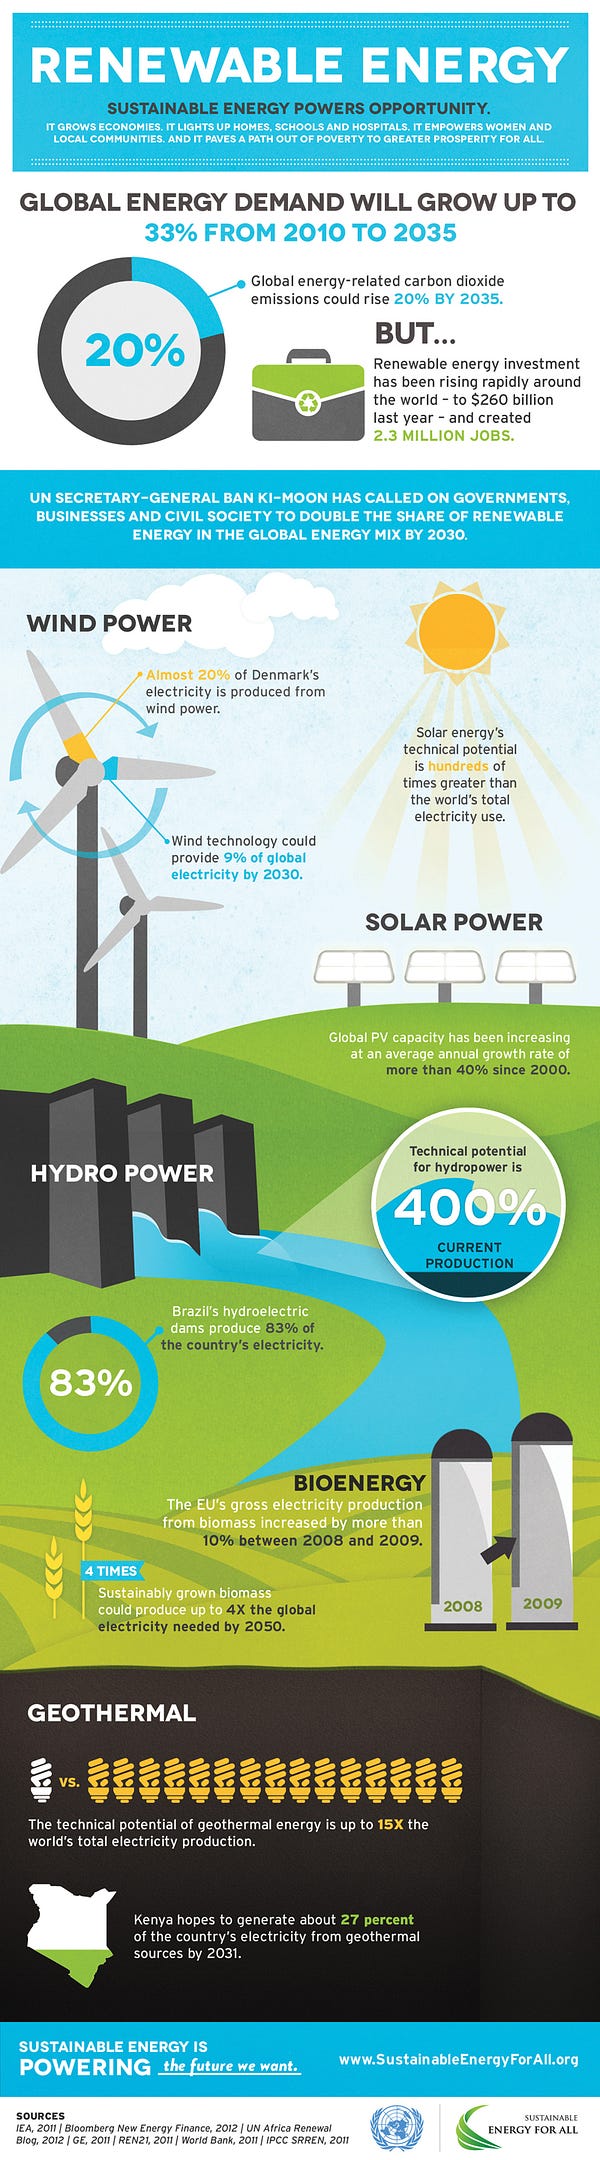 infographic on renewable energy